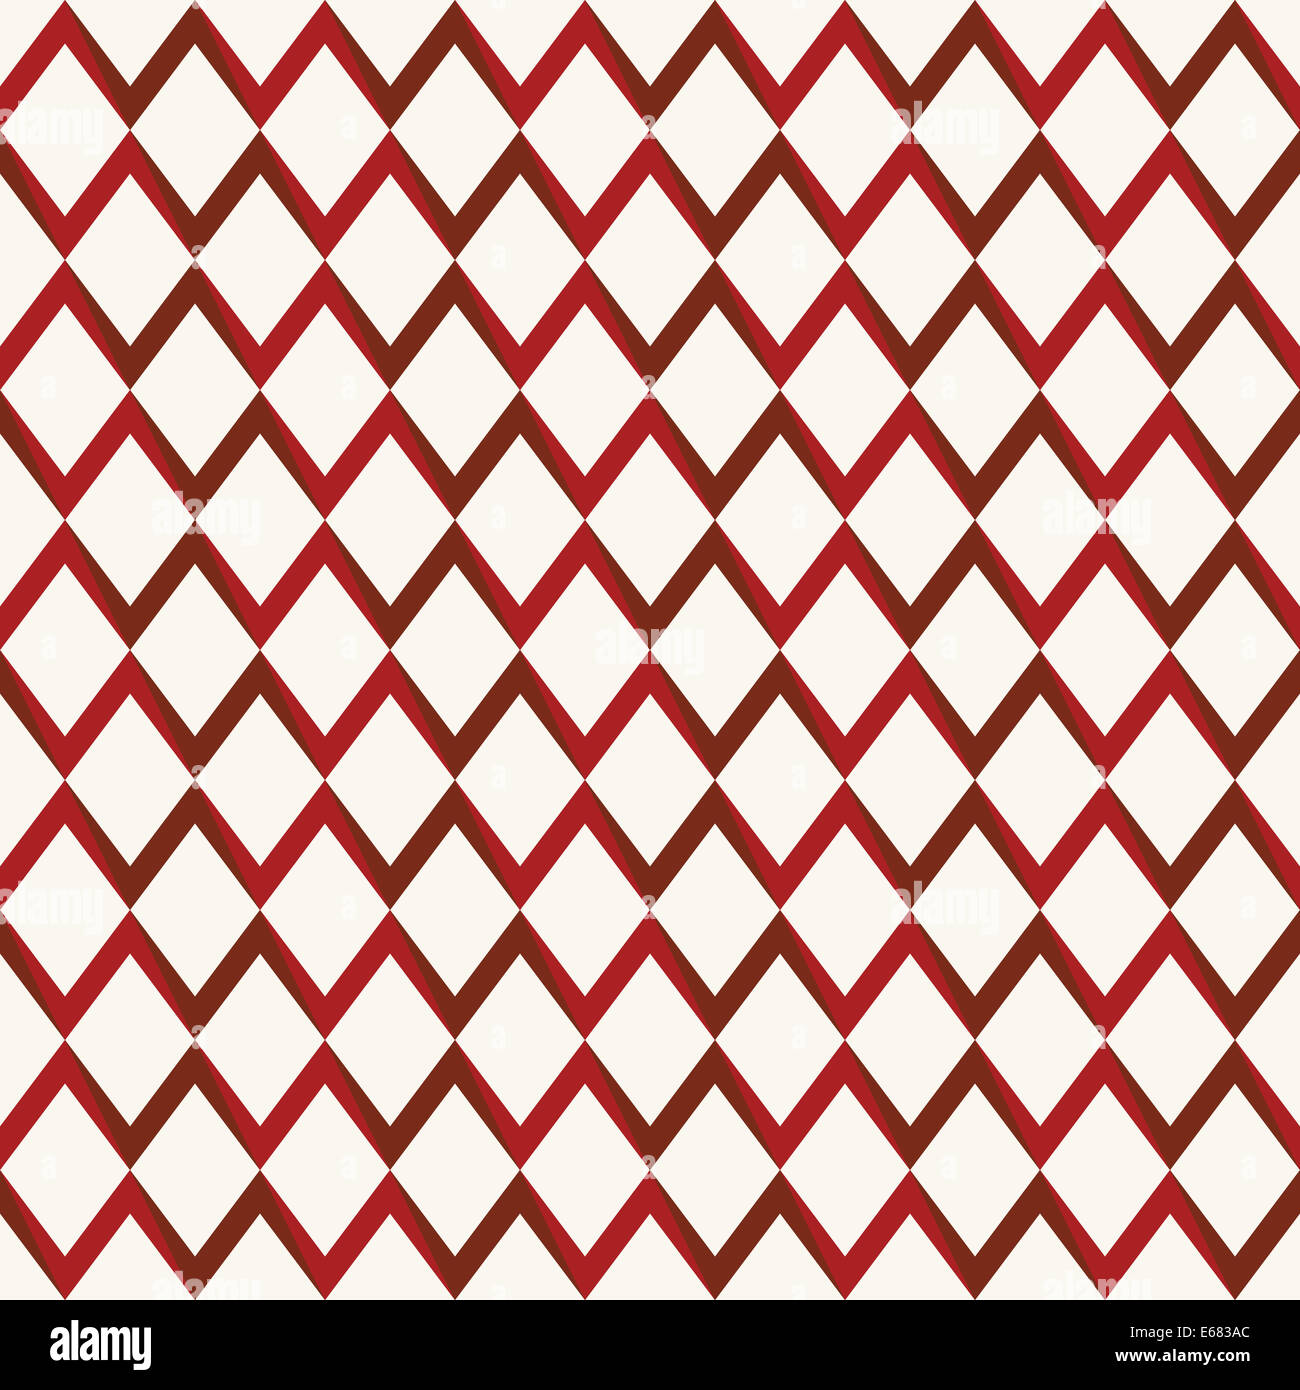 Retro-nahtlose Muster mit Dreieck, Raute Formen. Stockfoto